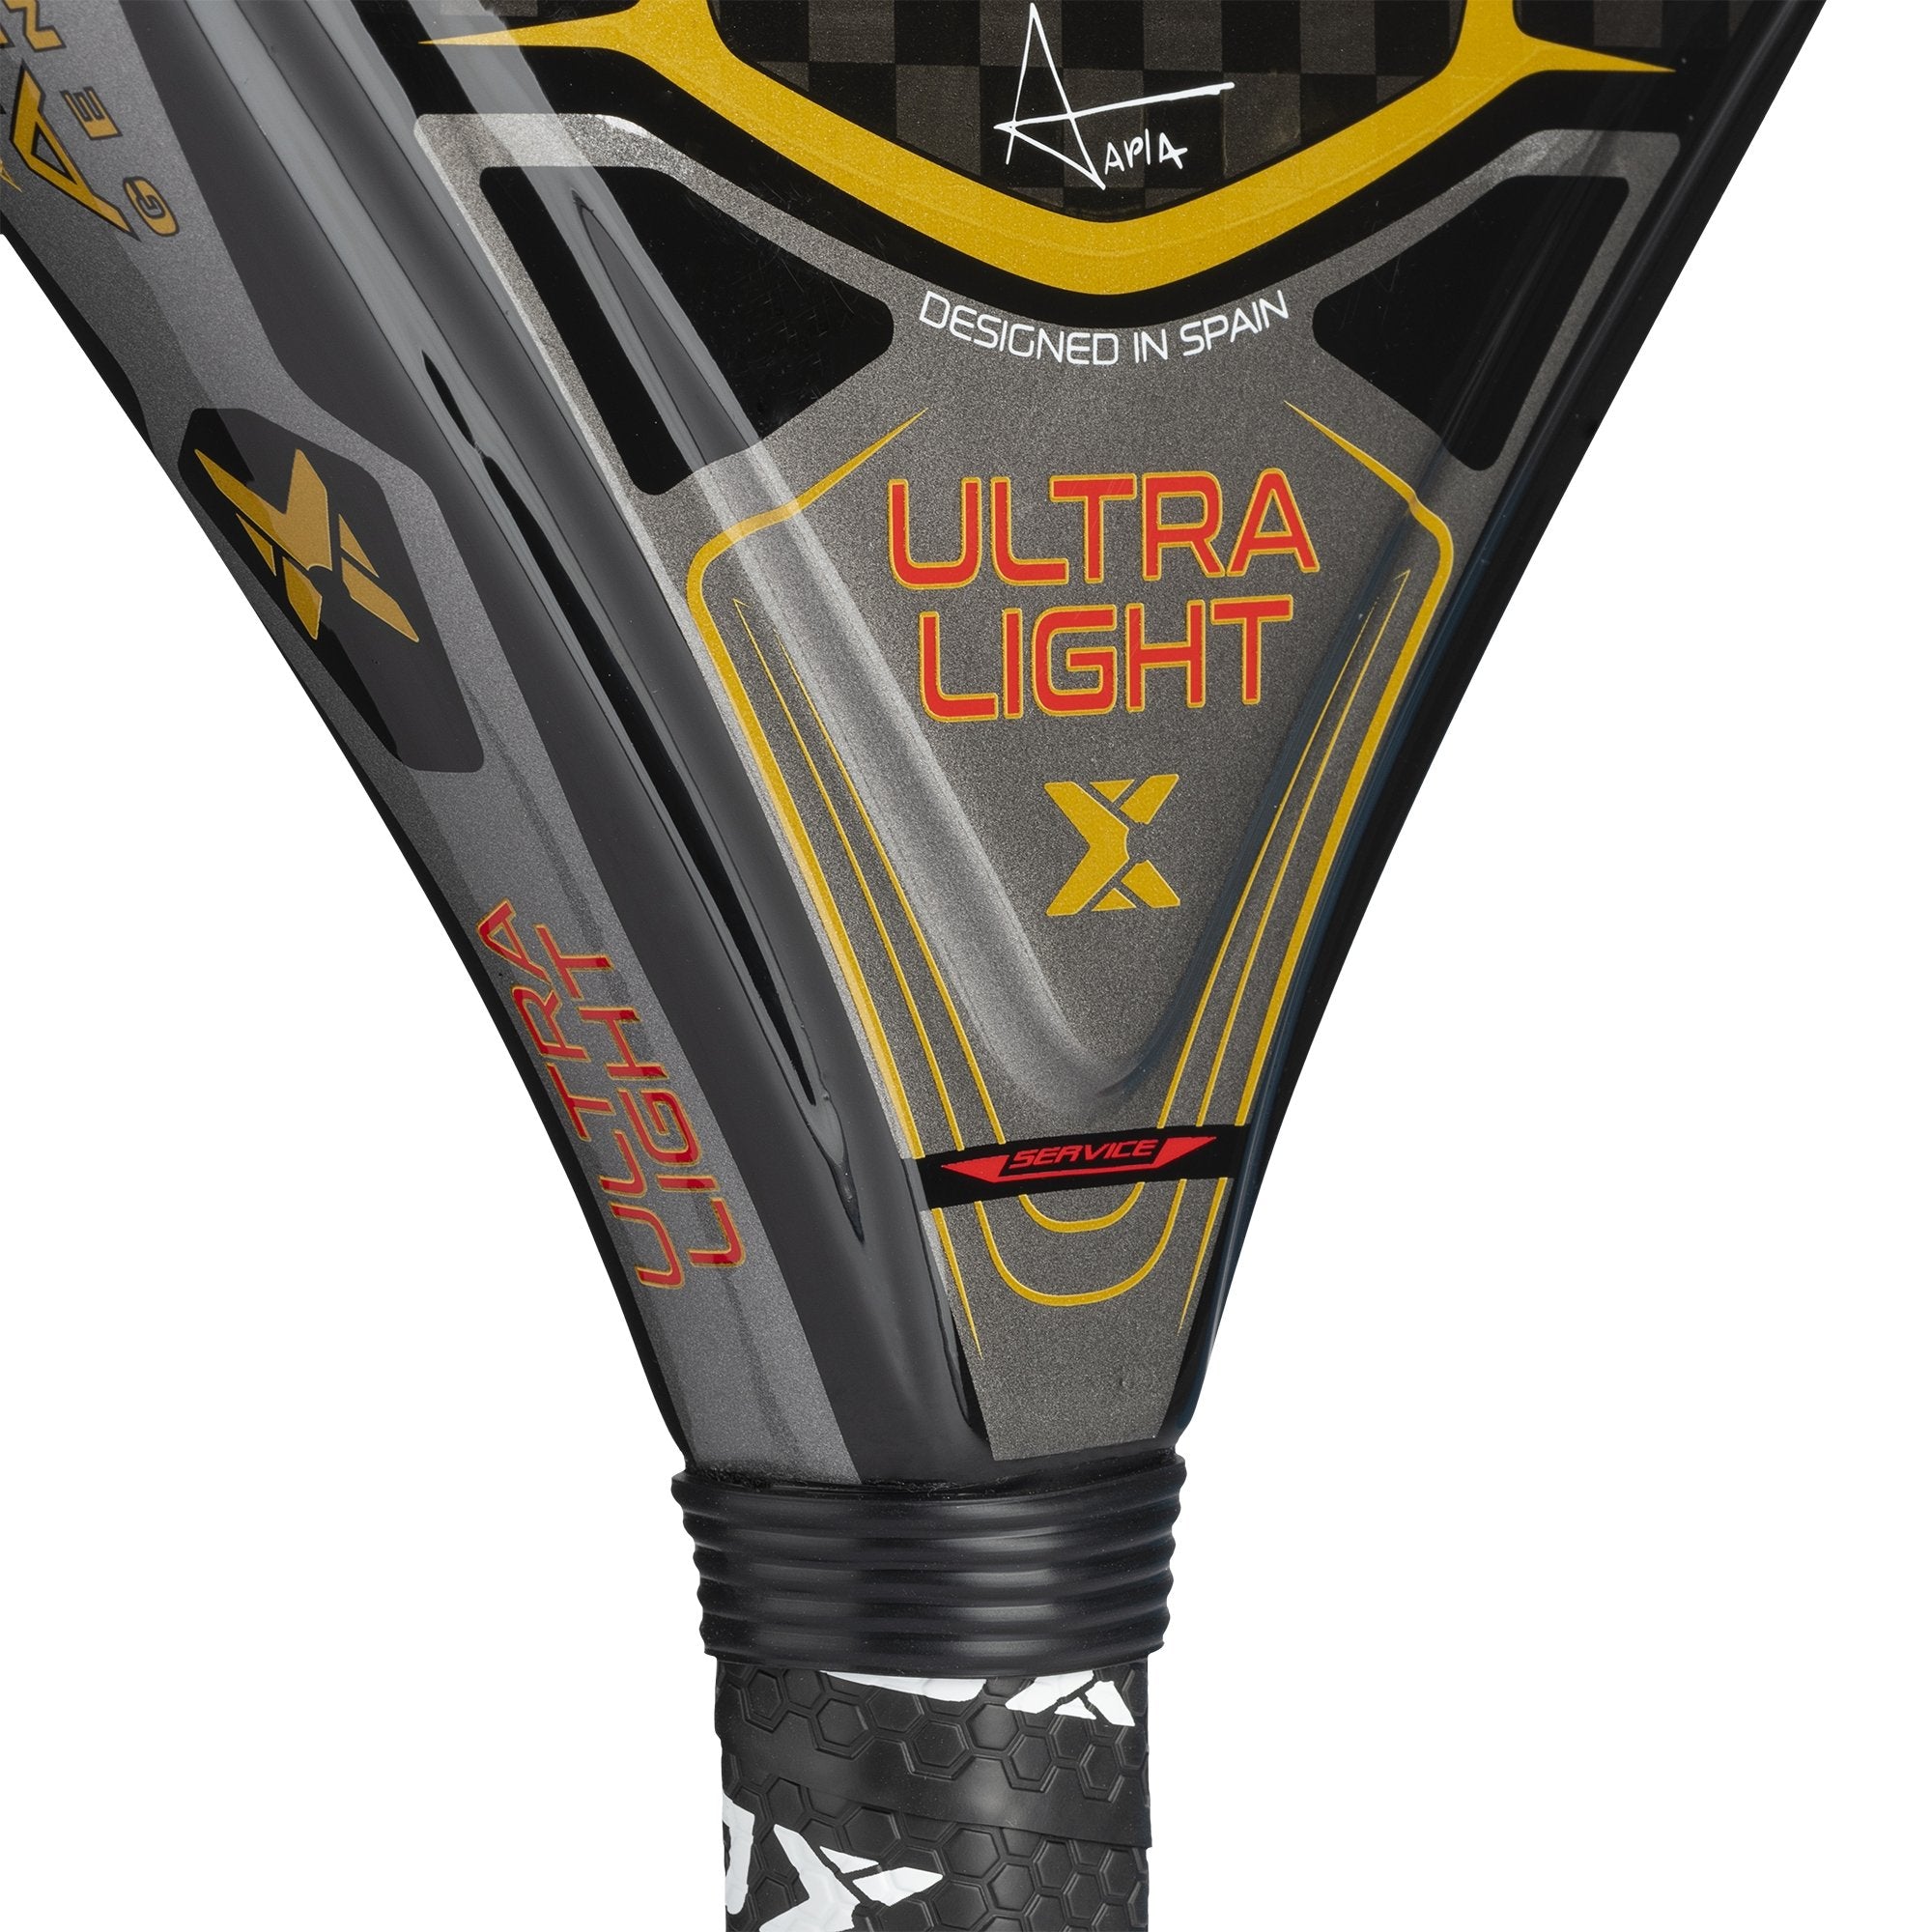 At10 Genius Ultra Light Nox